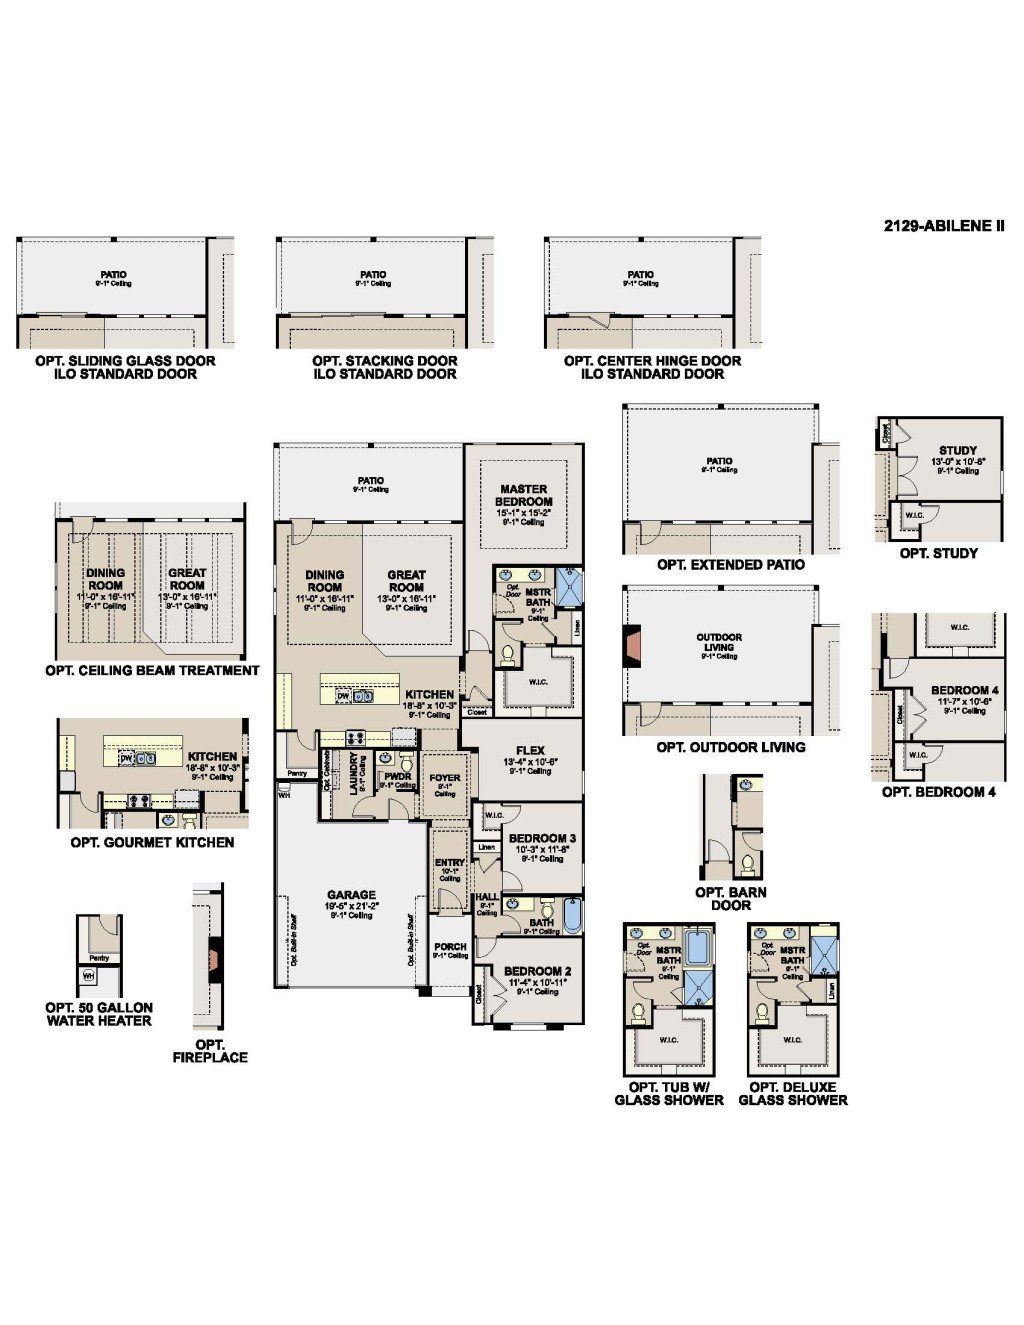 2129 Abilene Home Design Layout